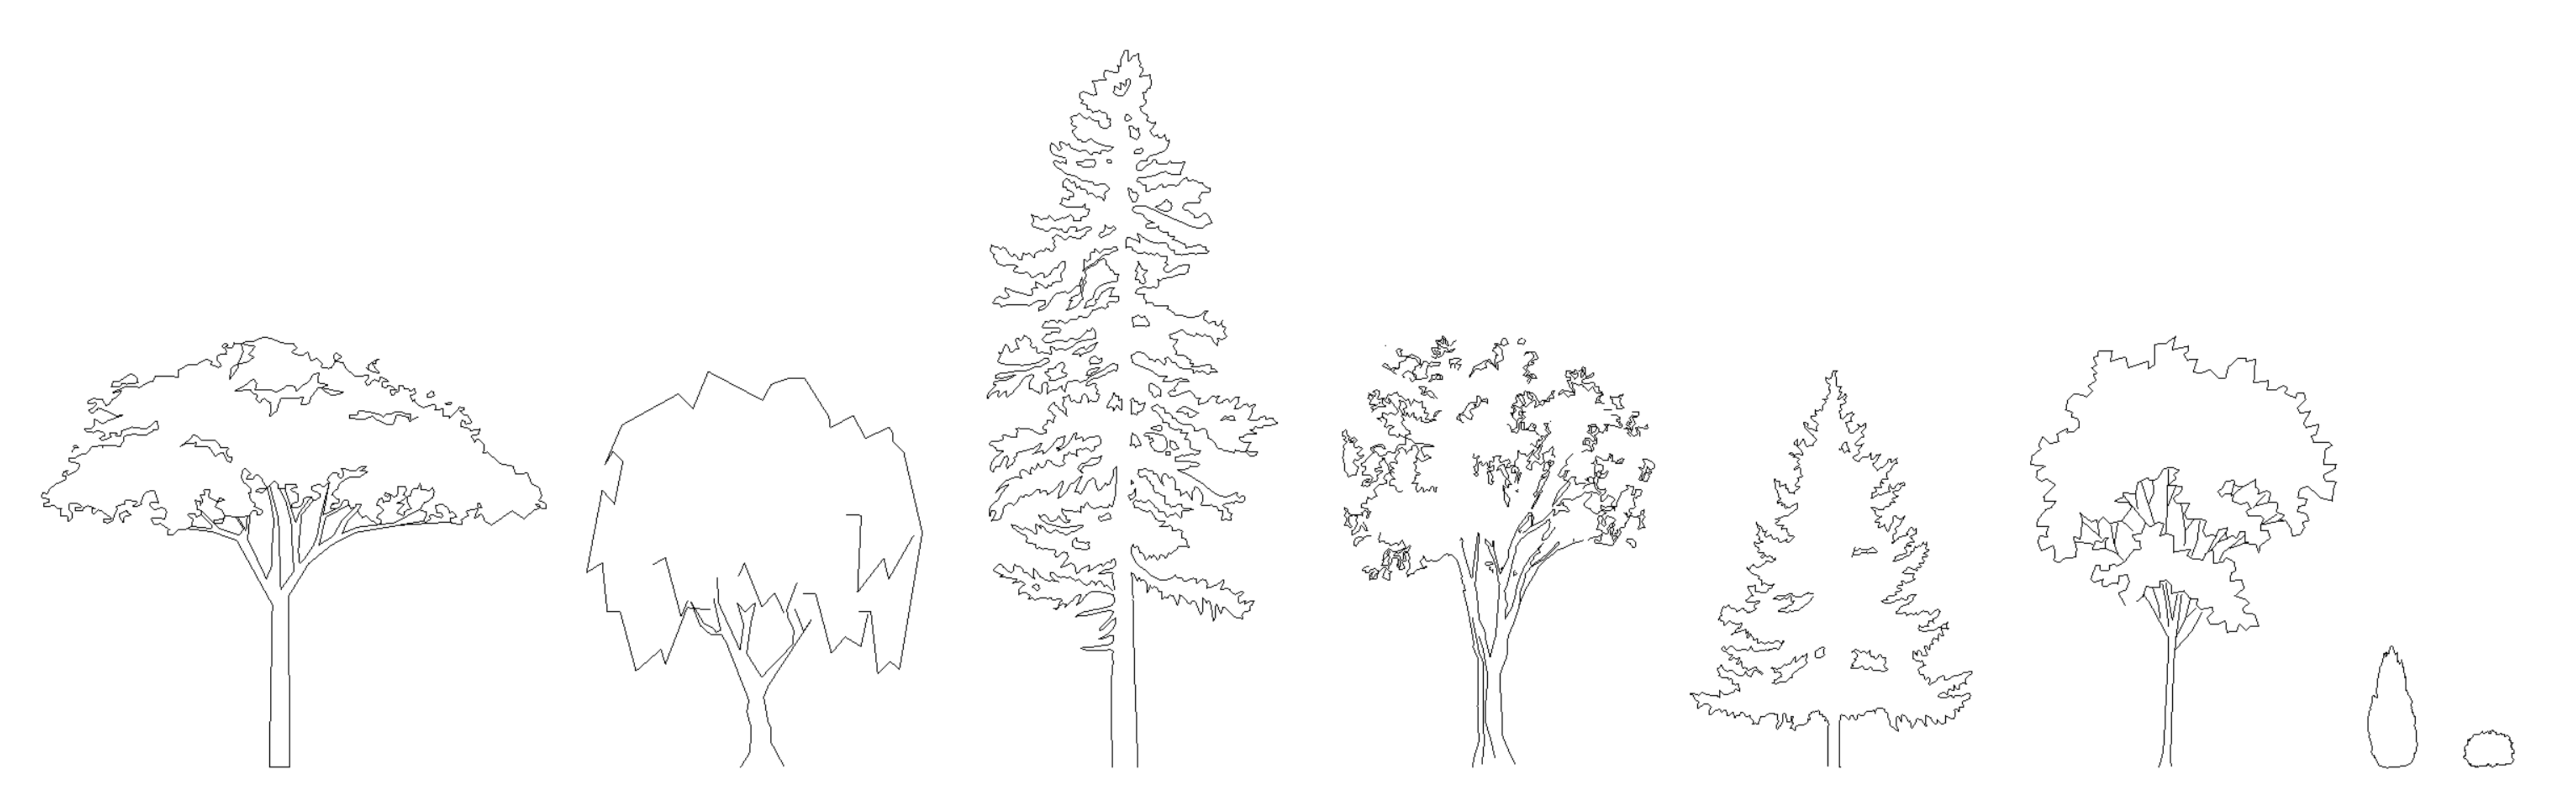 Revit elevation showing columnar, weeping, round, pyramidal, umbrella, and vase-shaped trees.